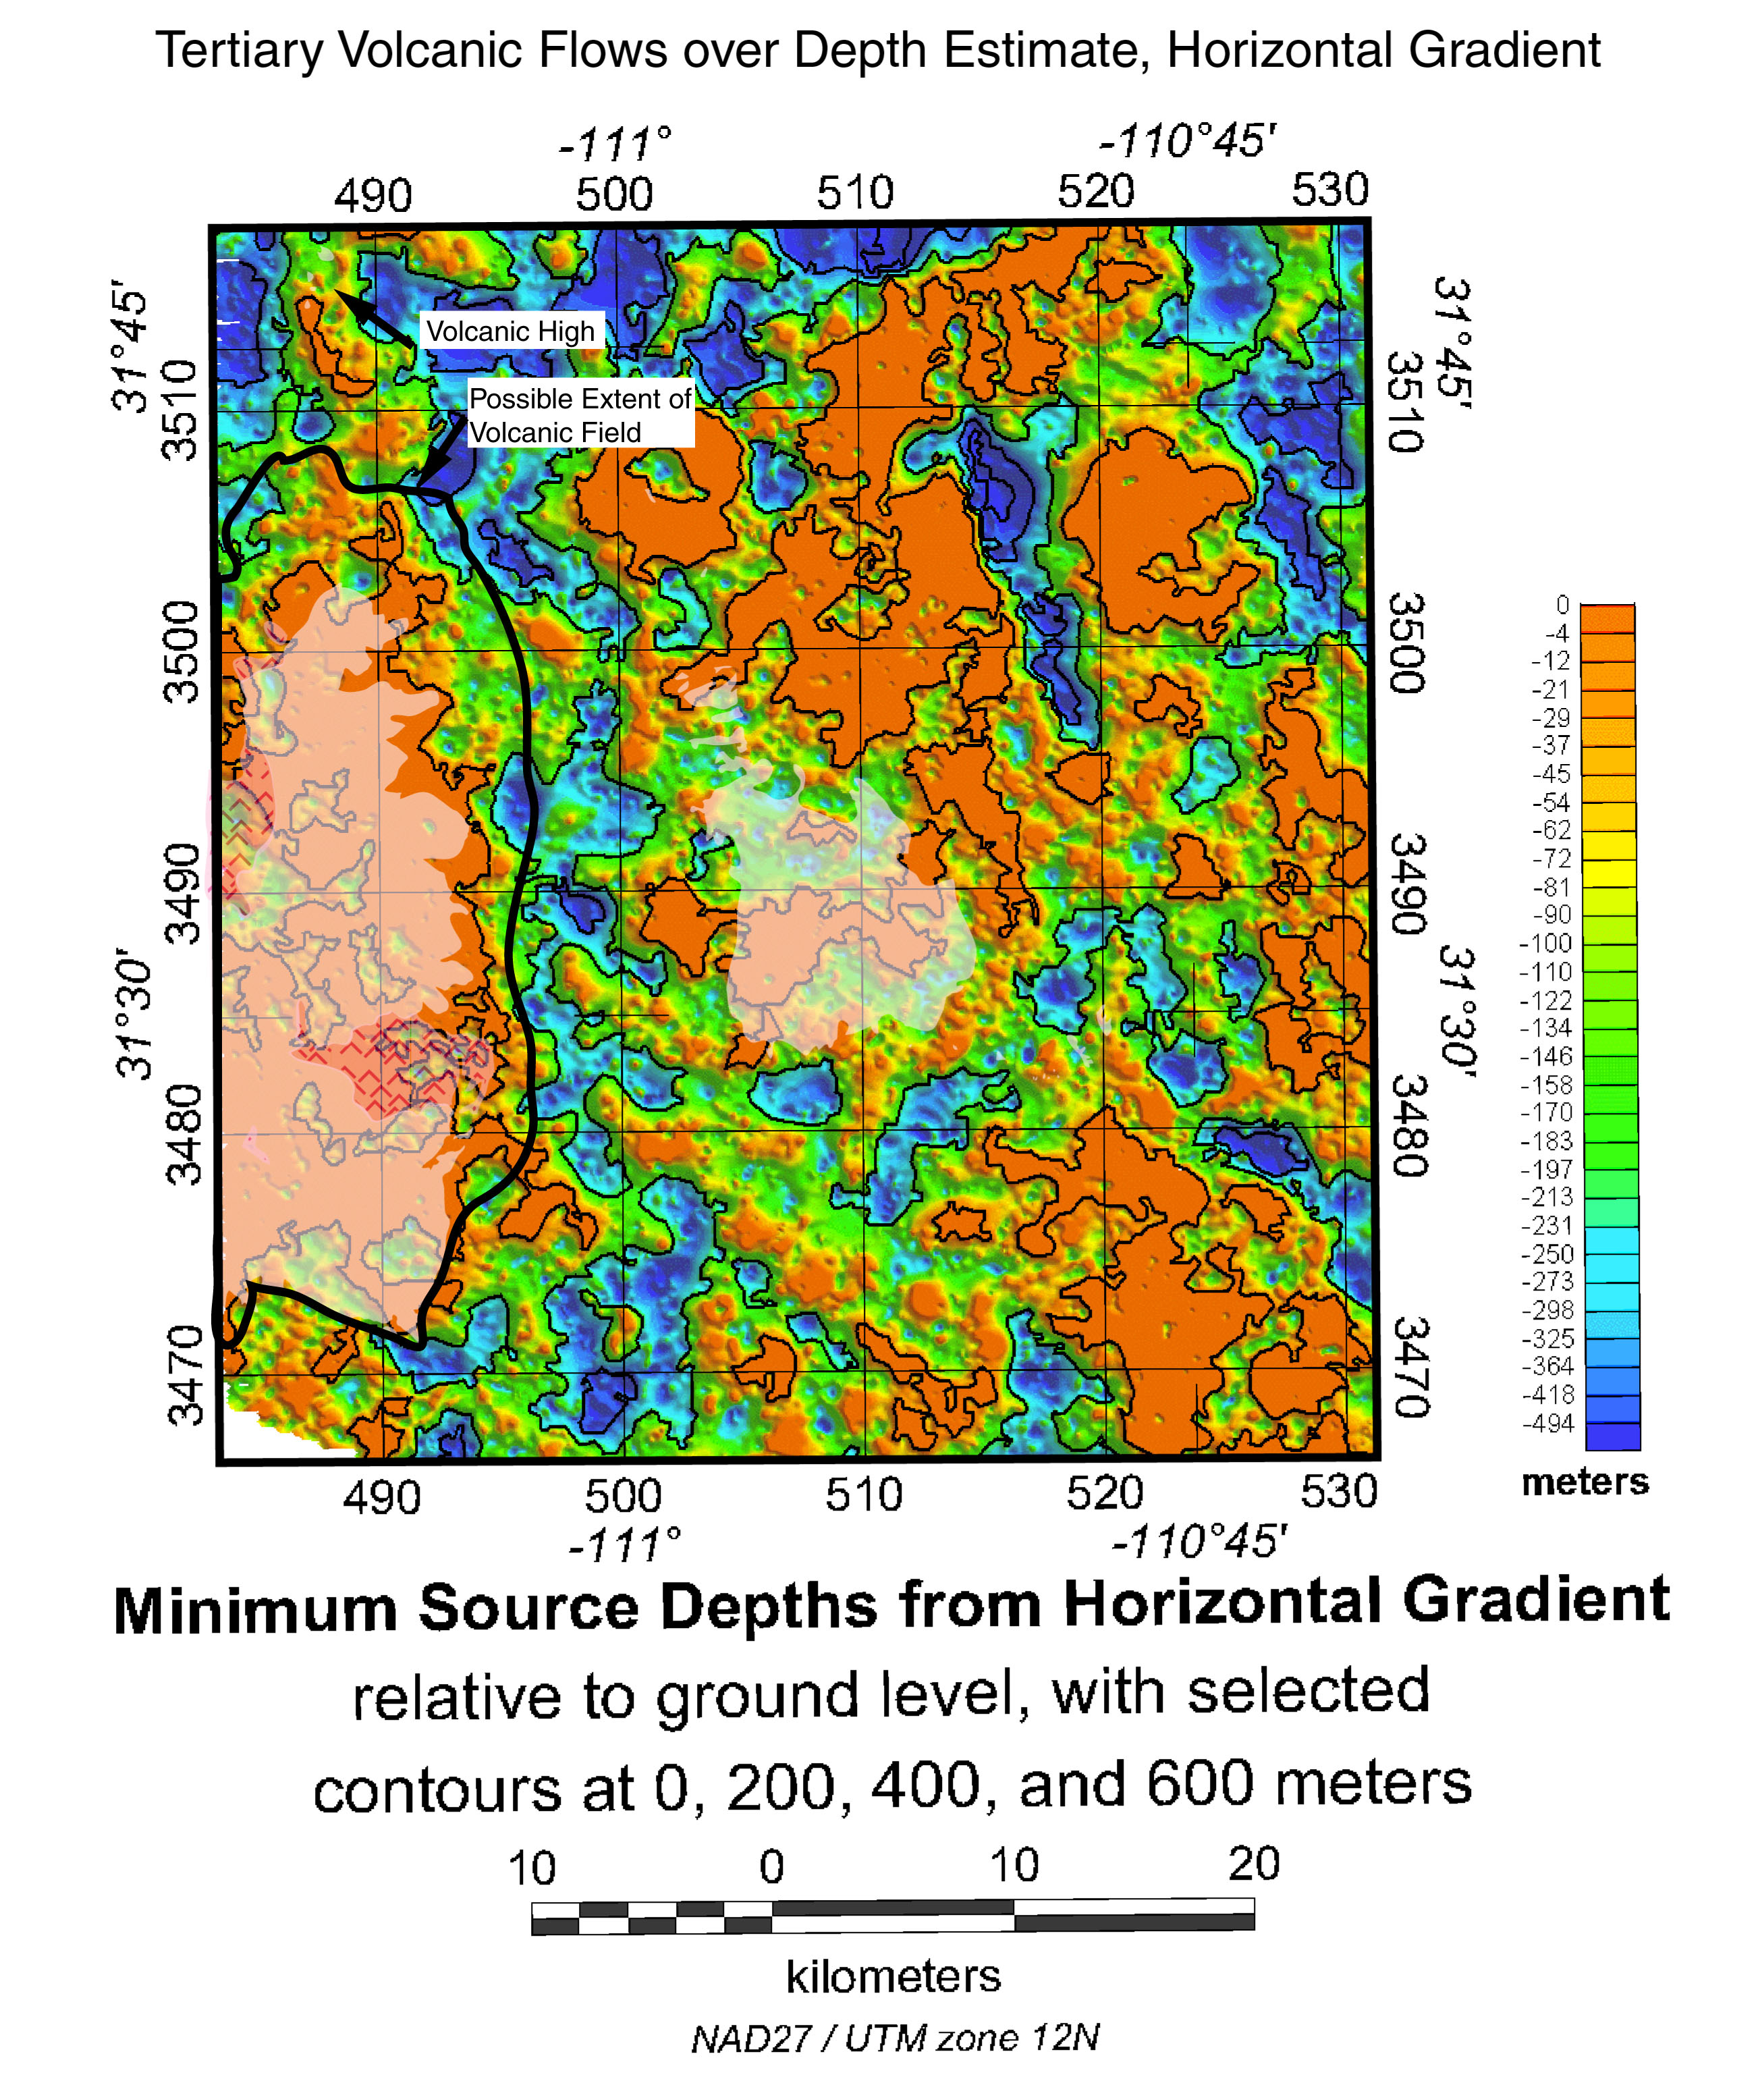 Tertiary volcanic flows over depth estimate, horizontal gradient